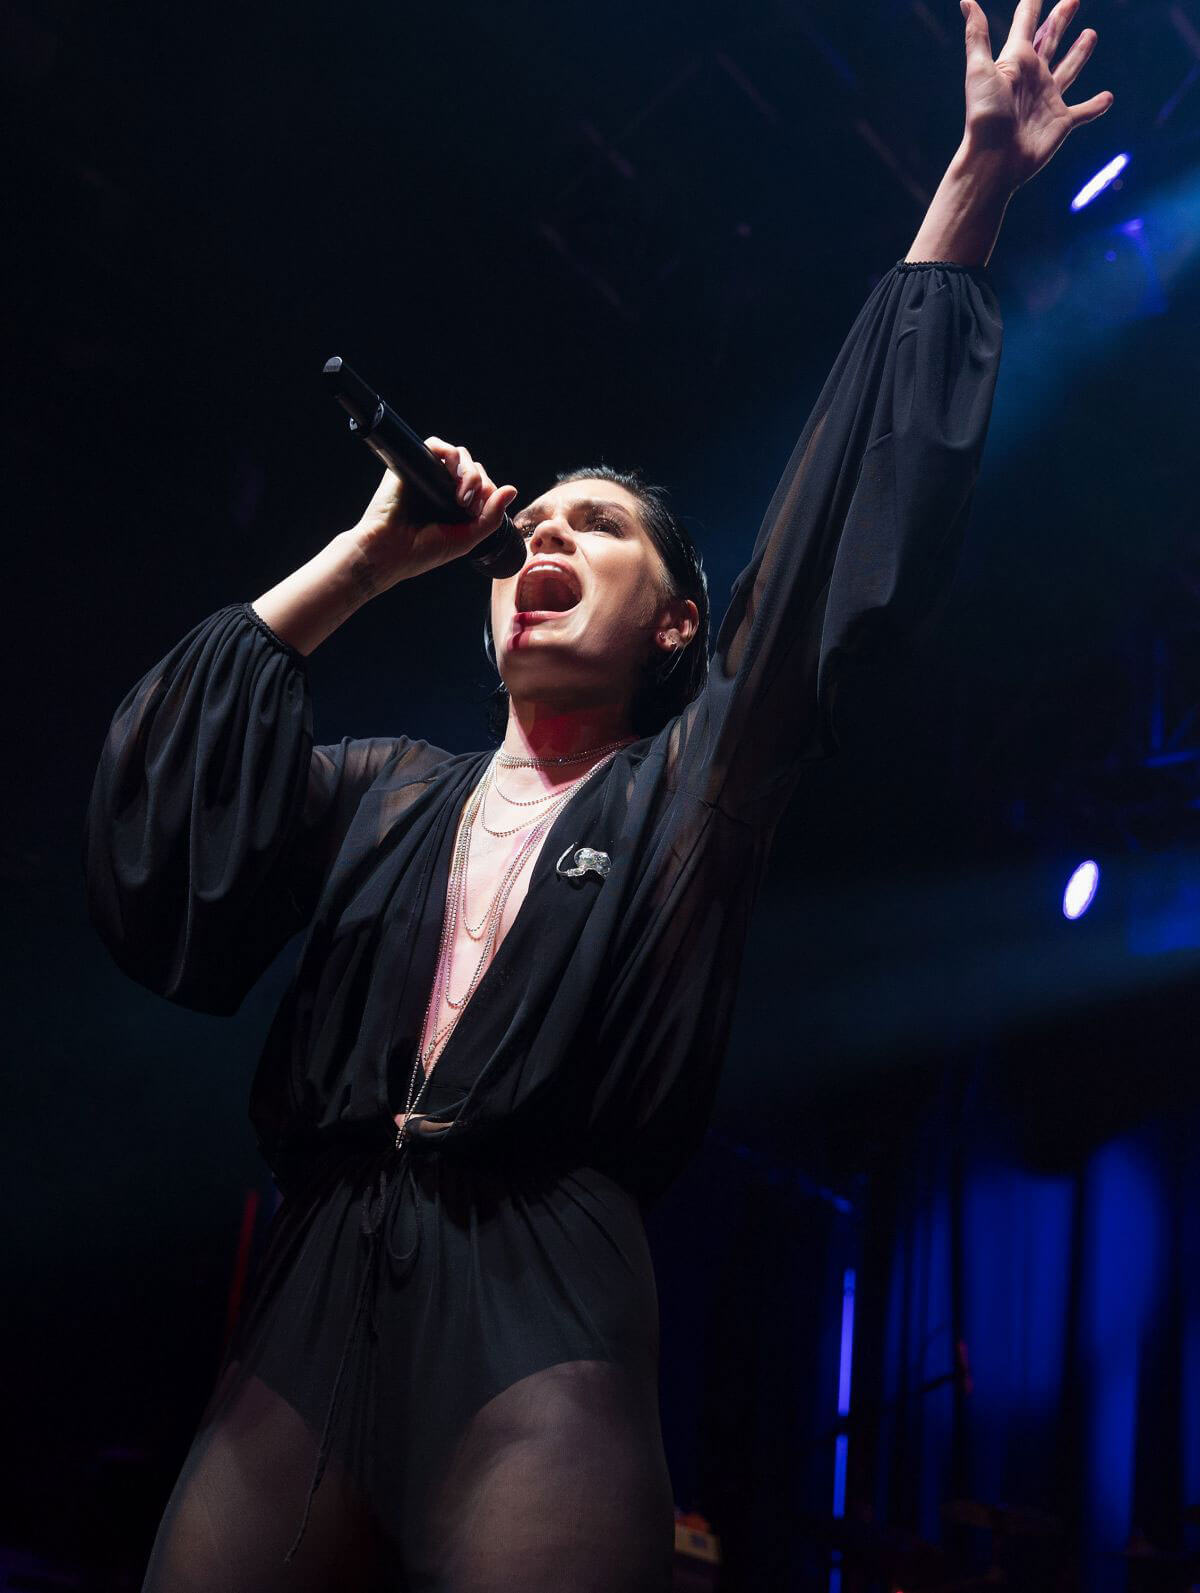 Jessie J Performs Stills at Koko in London Photos